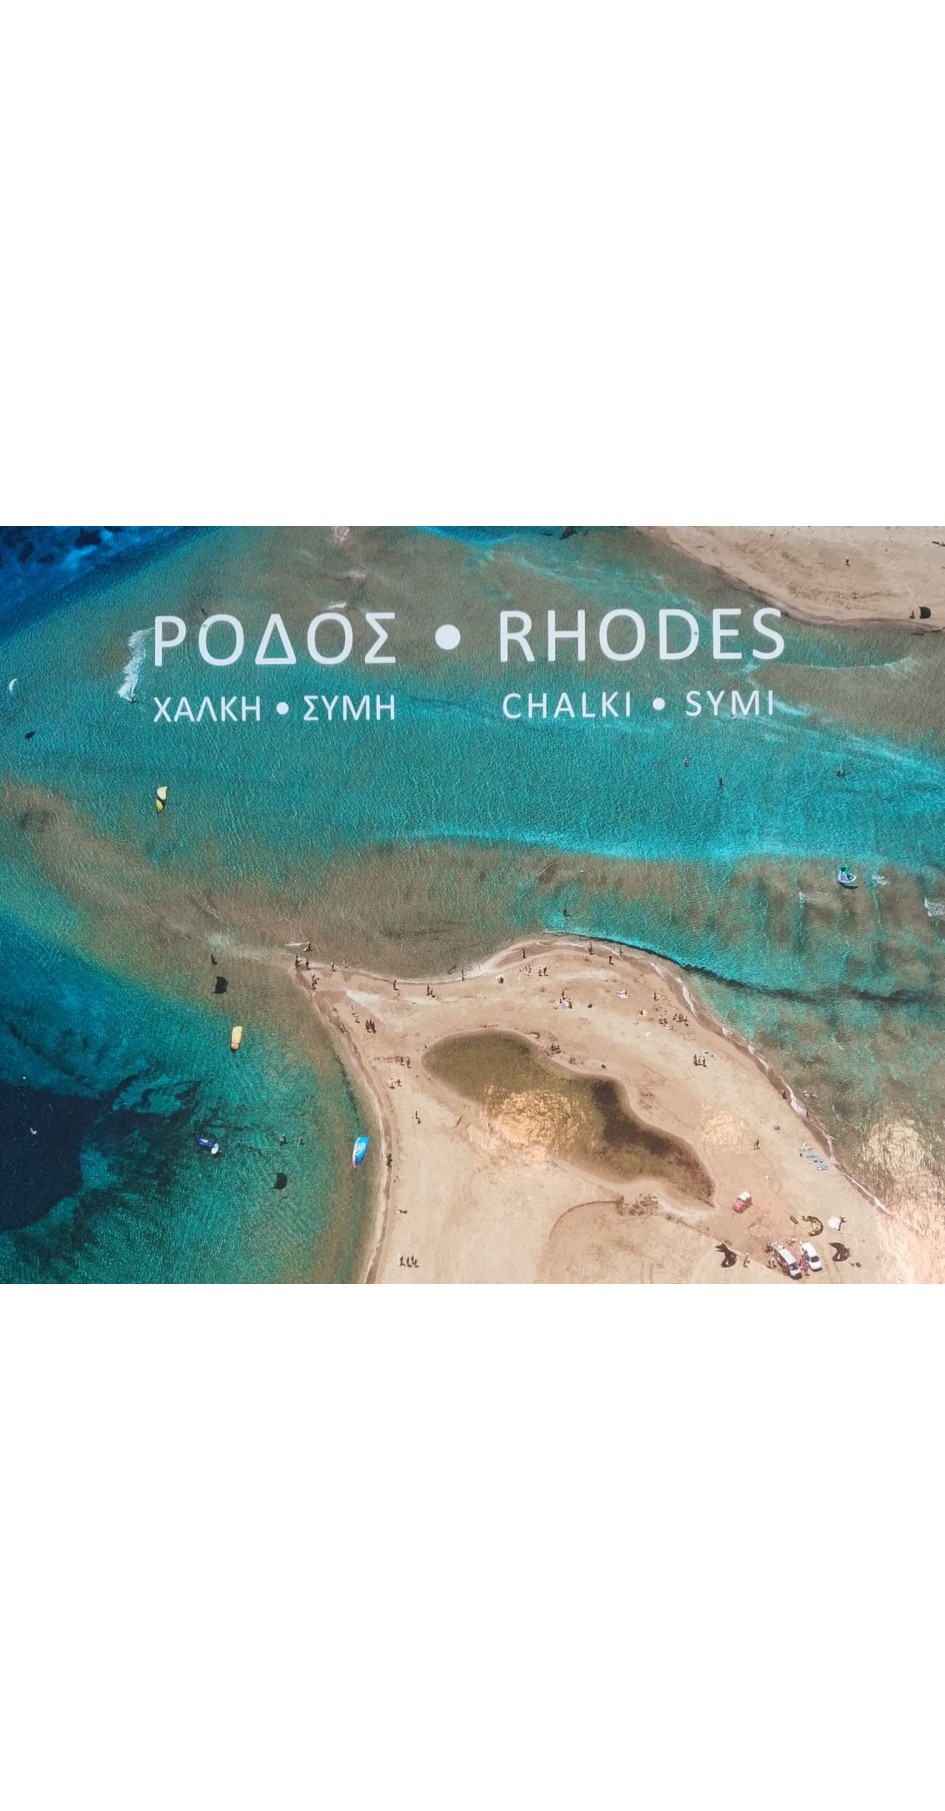 Rhodes, Chalki, Symi, as the seagull flies